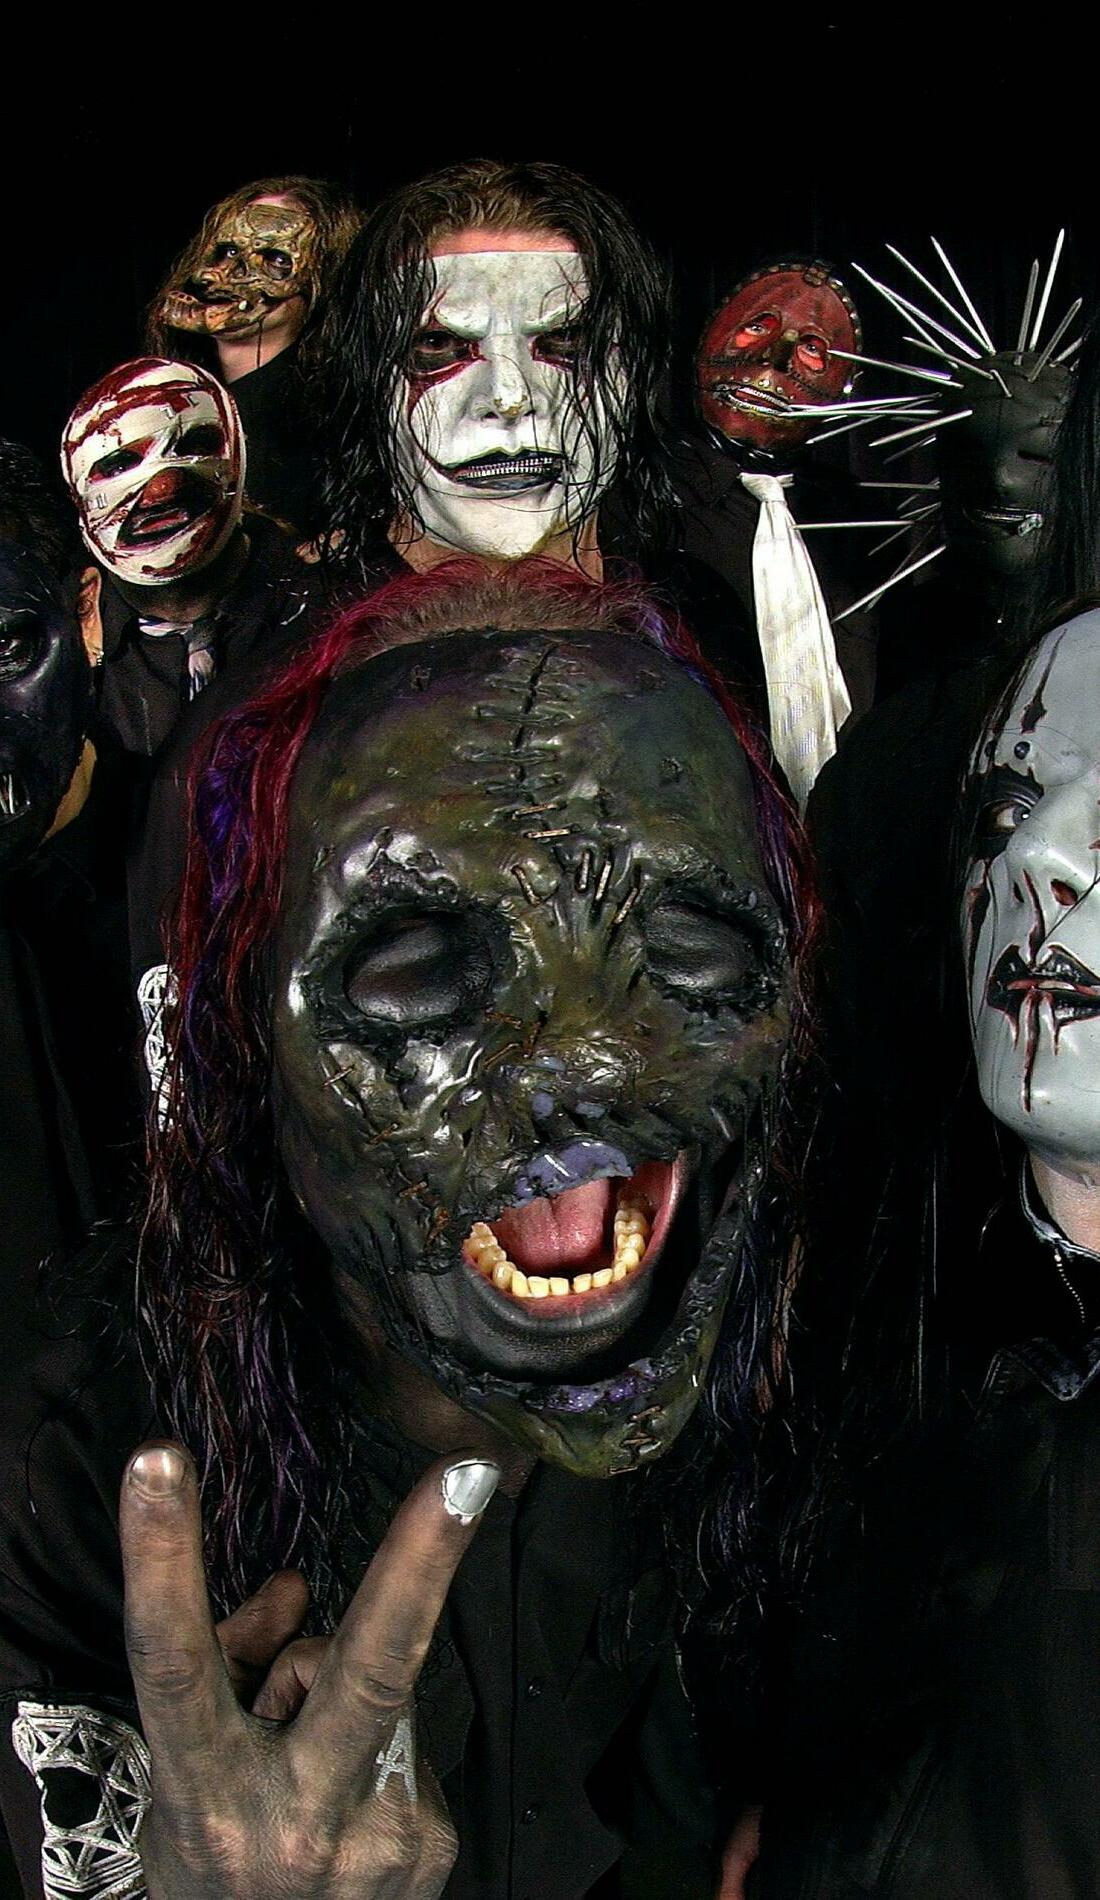 A Slipknot live event